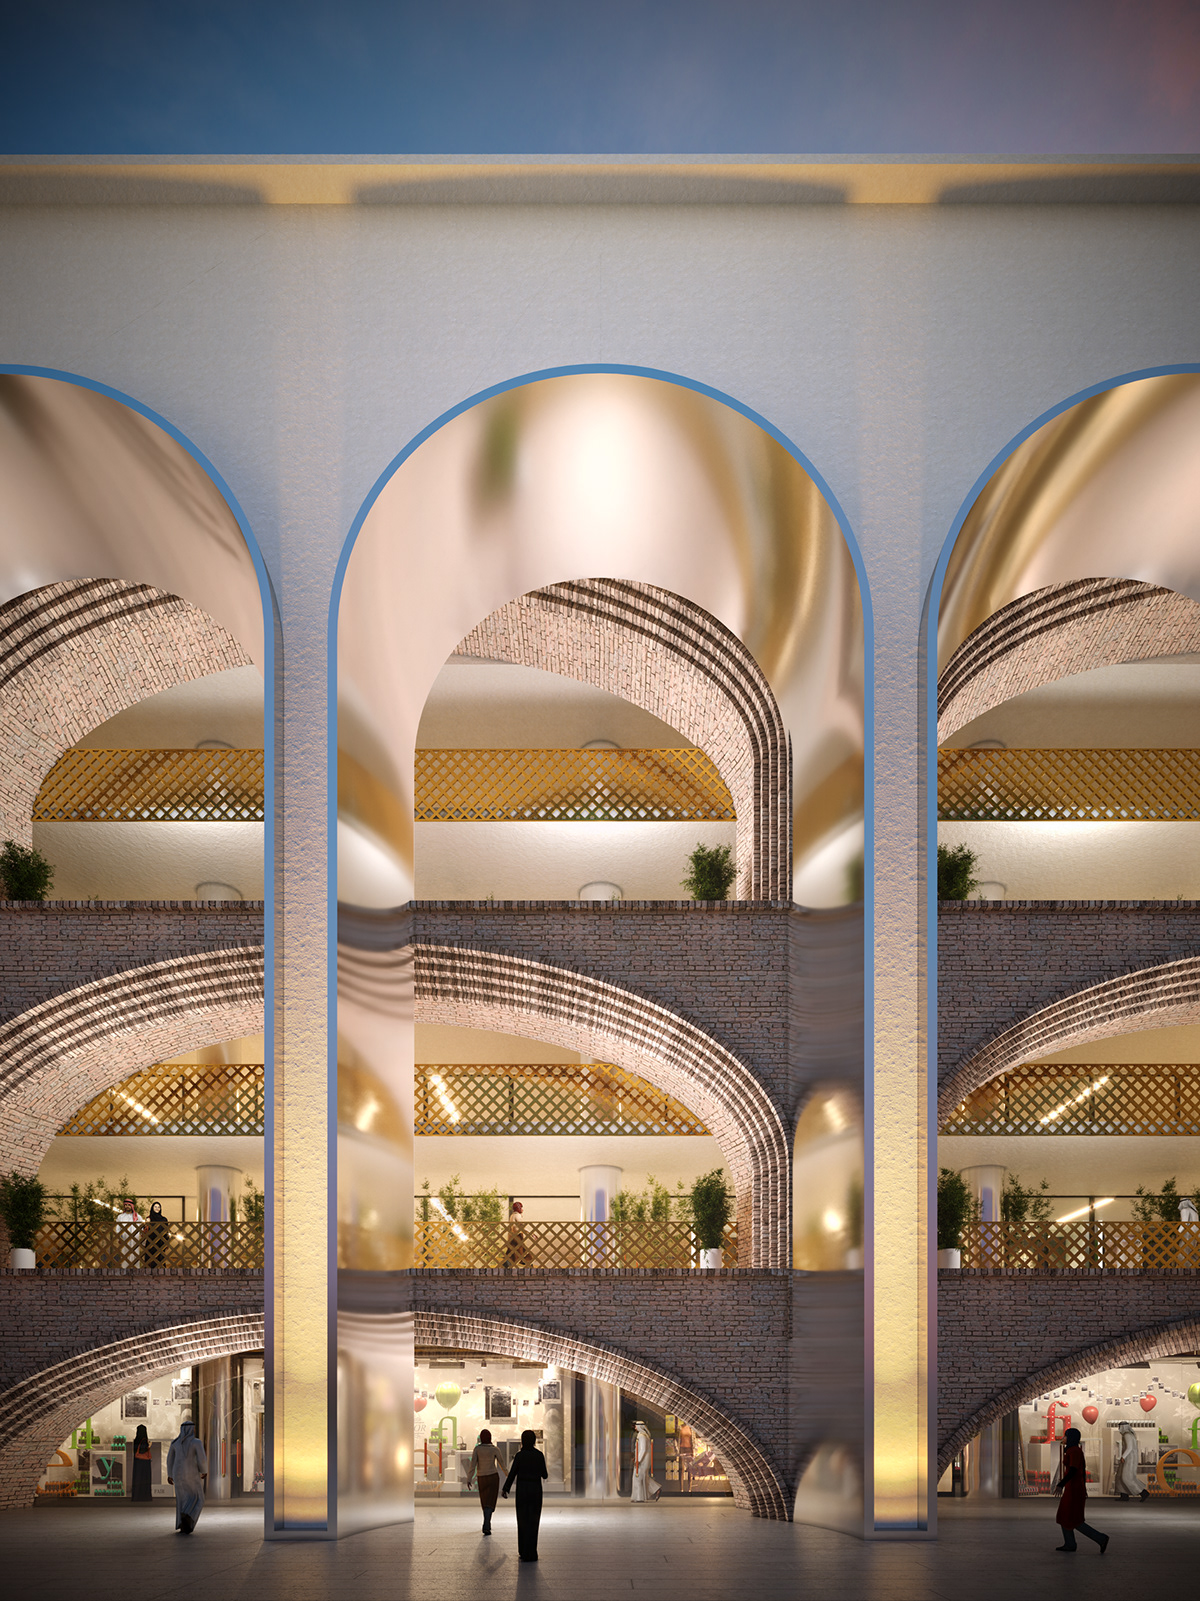 3dsmax coronarenderer photoshop vray architecture mall Emirate dubai